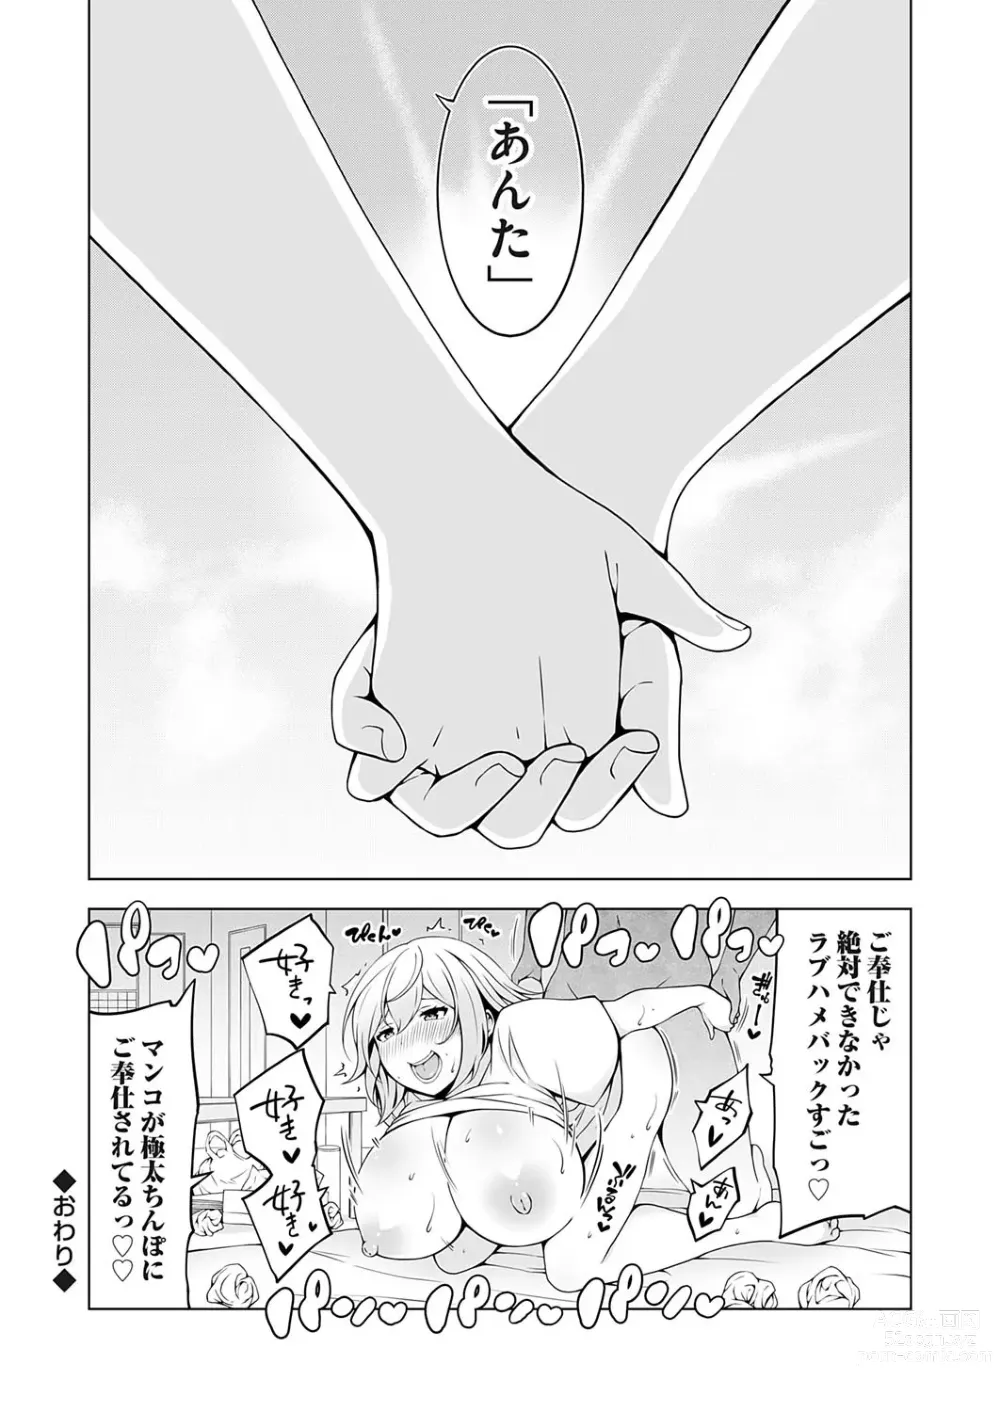 Page 159 of manga COMIC Grape Vol. 118